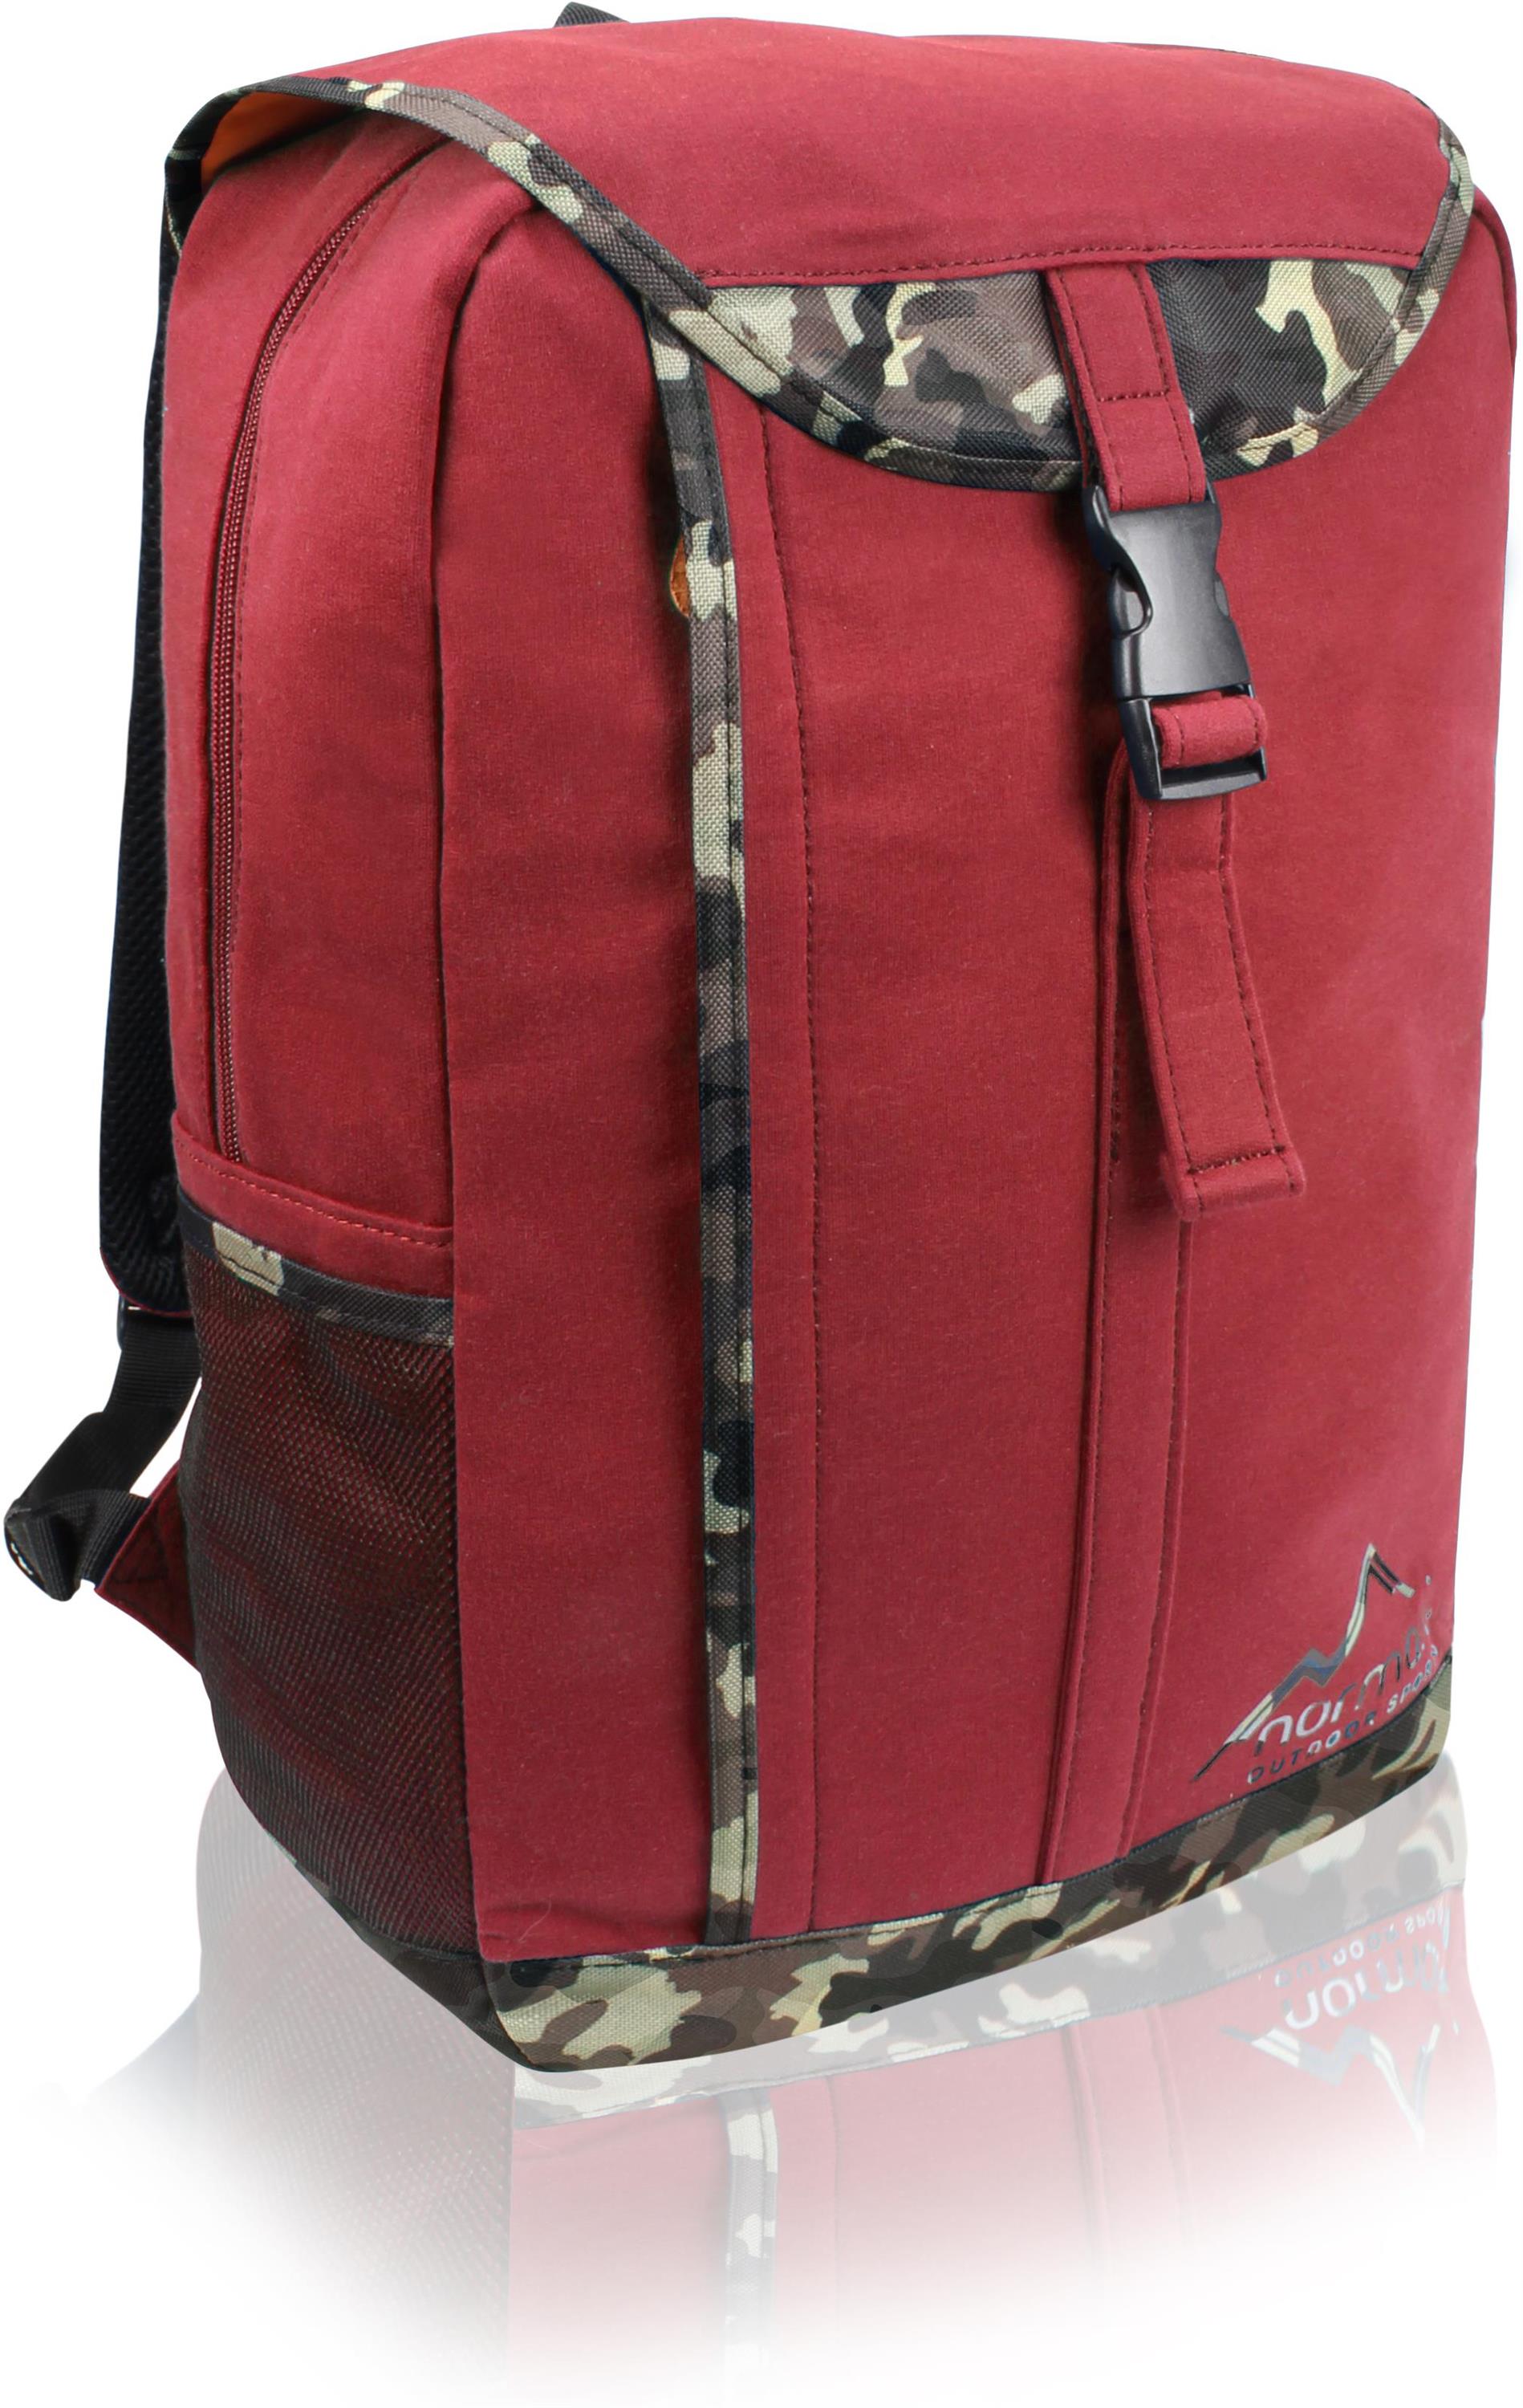 Рюкзак Normani Outdoor Sports Freshman, красный рюкзак freshman normani outdoor sports цвет rot